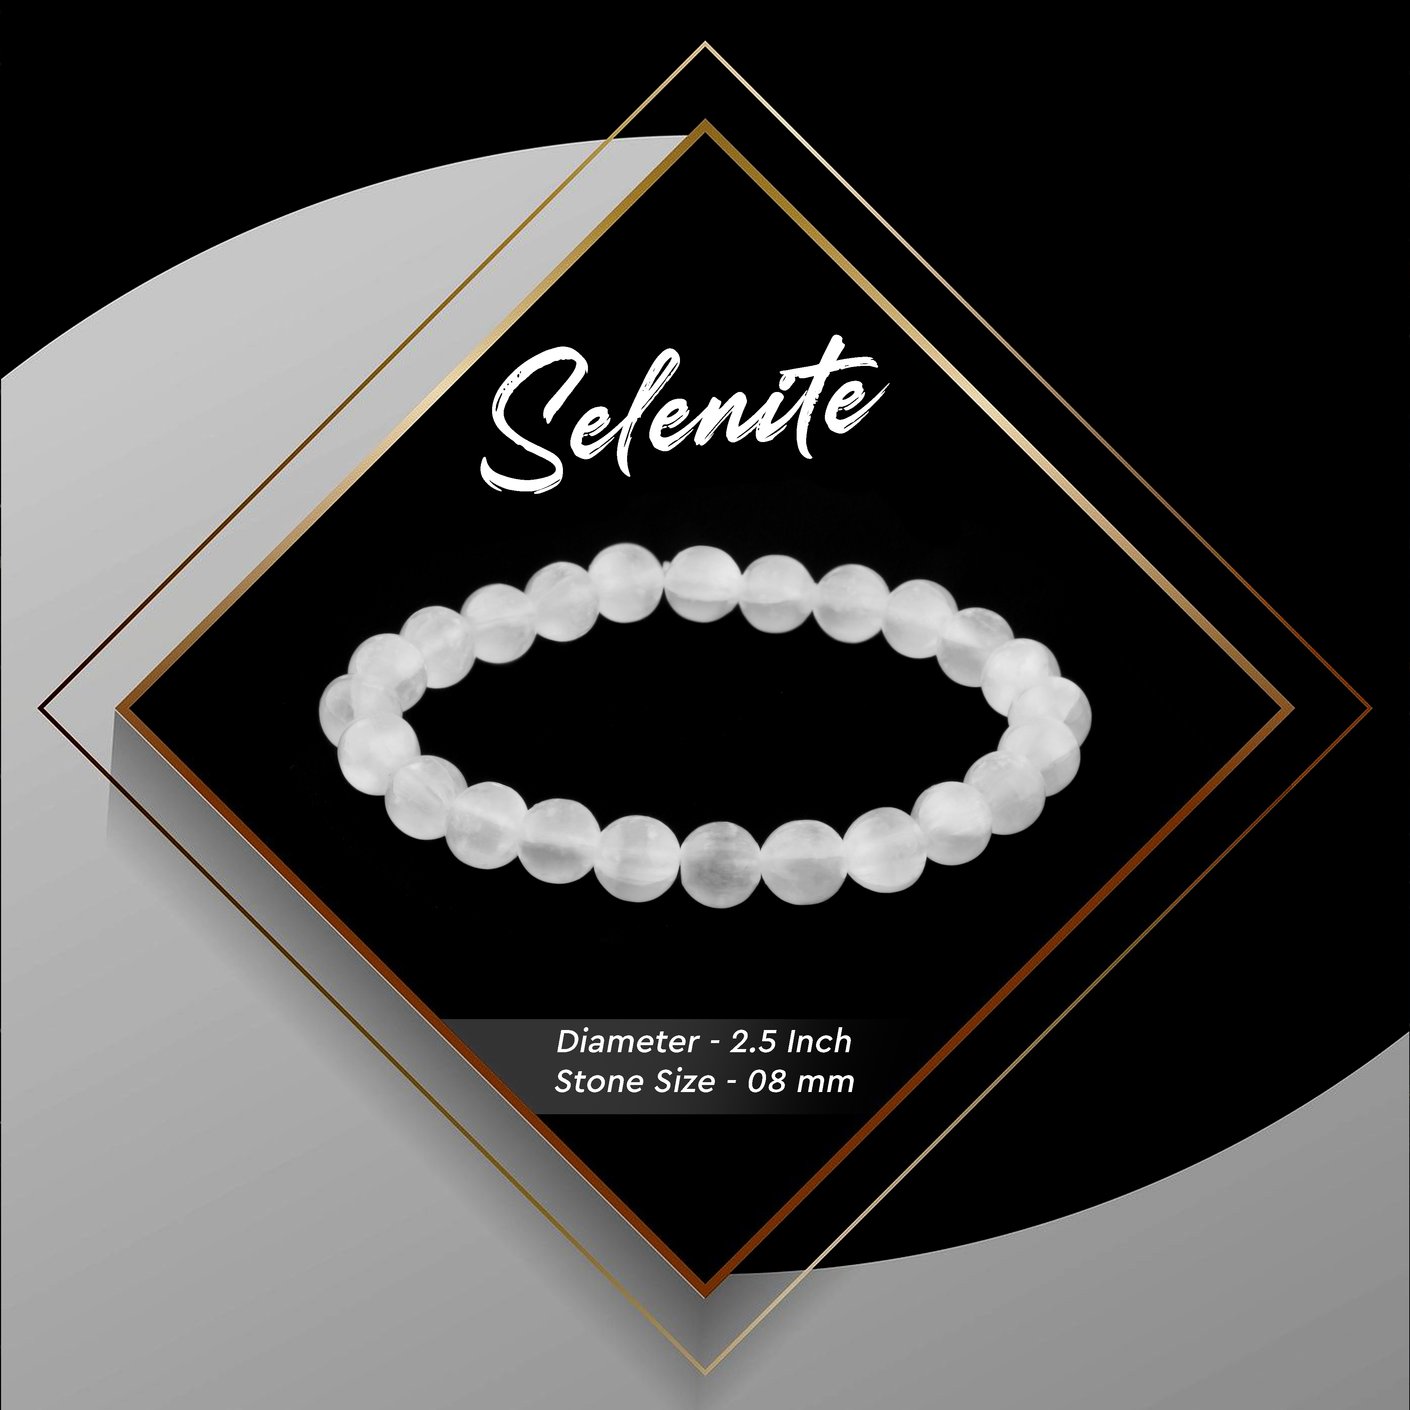 Selenite - Origin, Benefits, Precautions – G for Gemstones